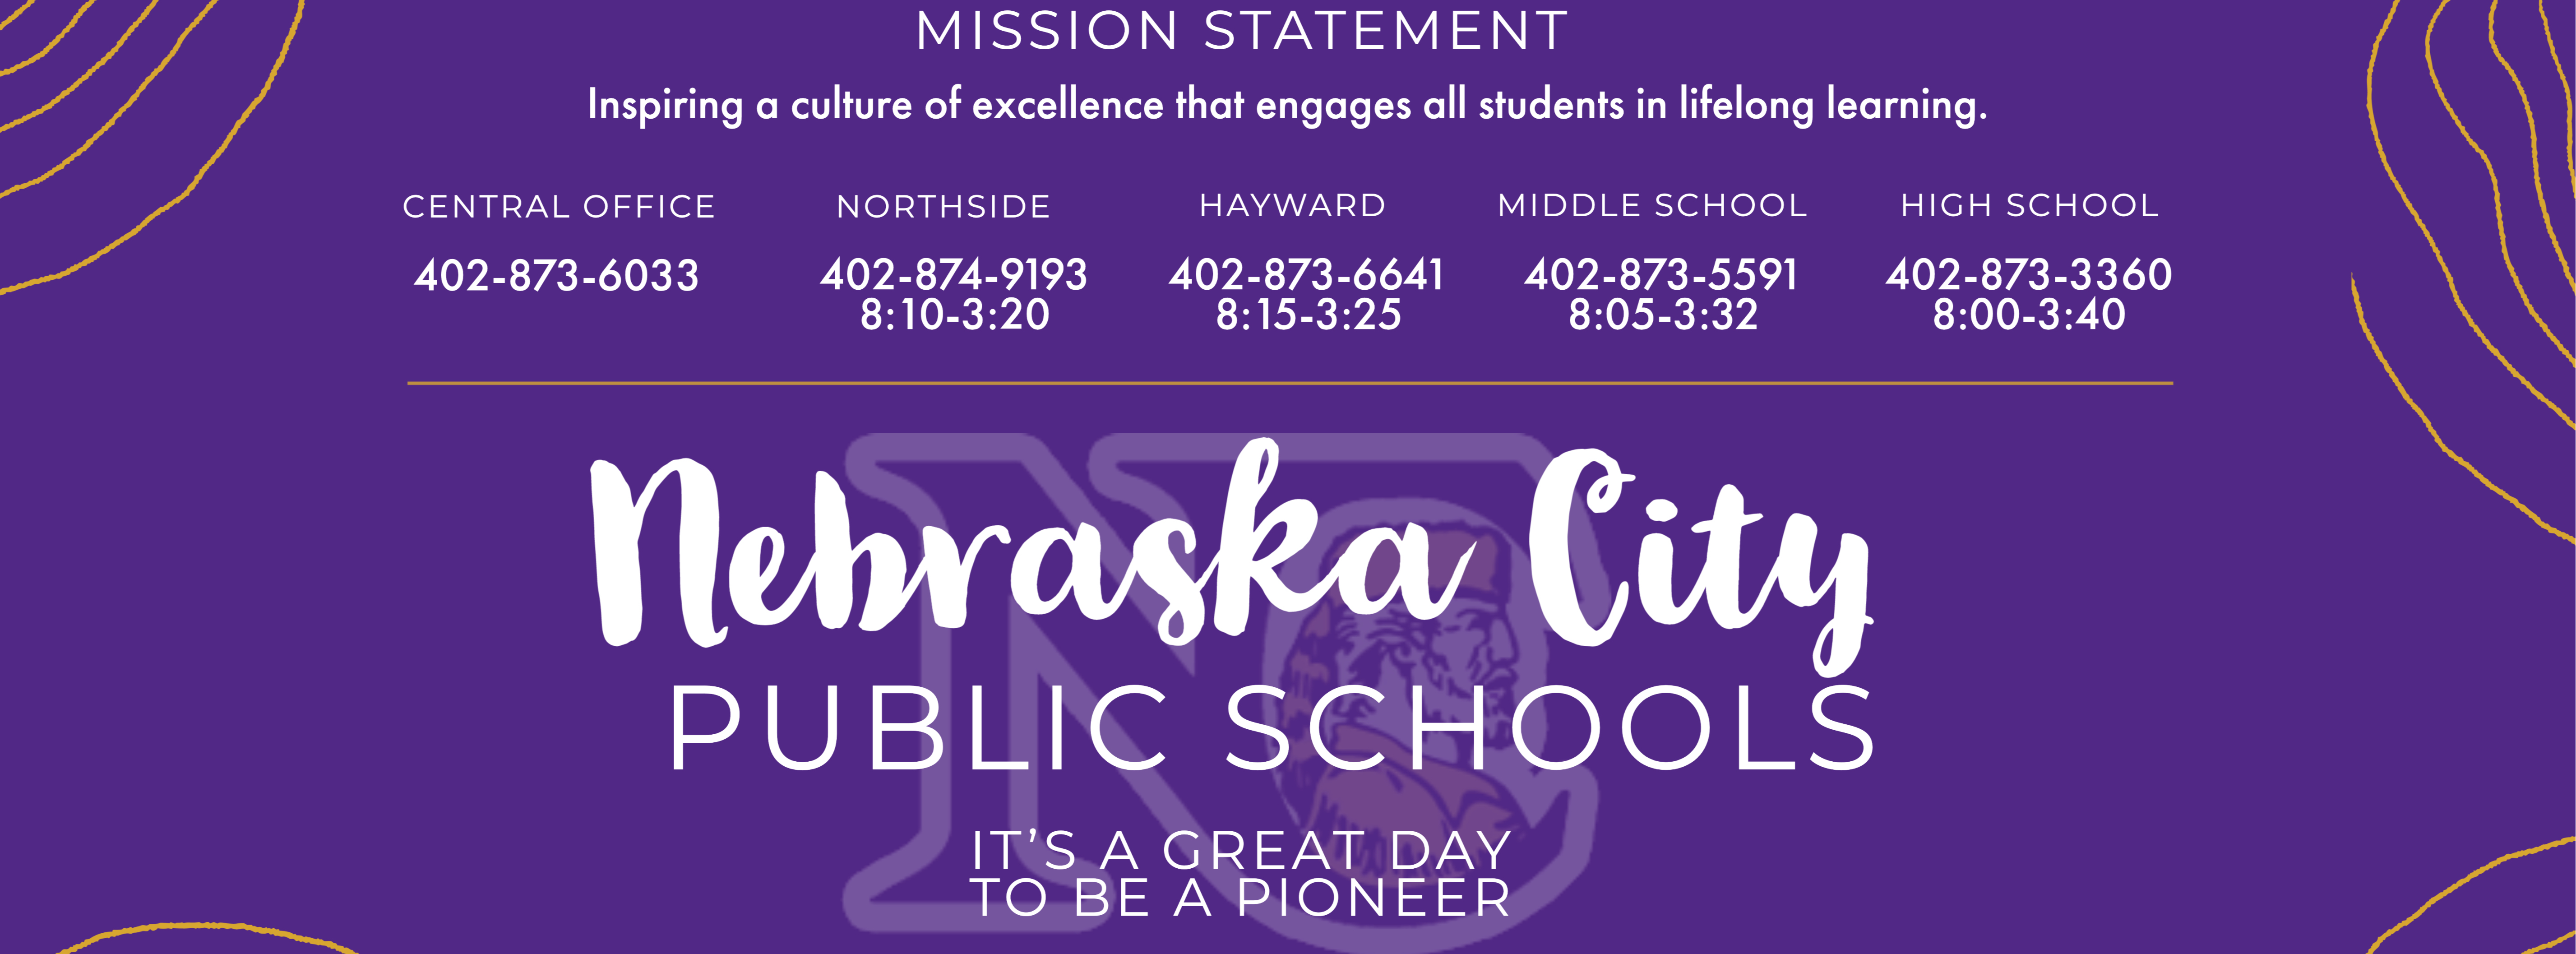 Nebraska City Public School